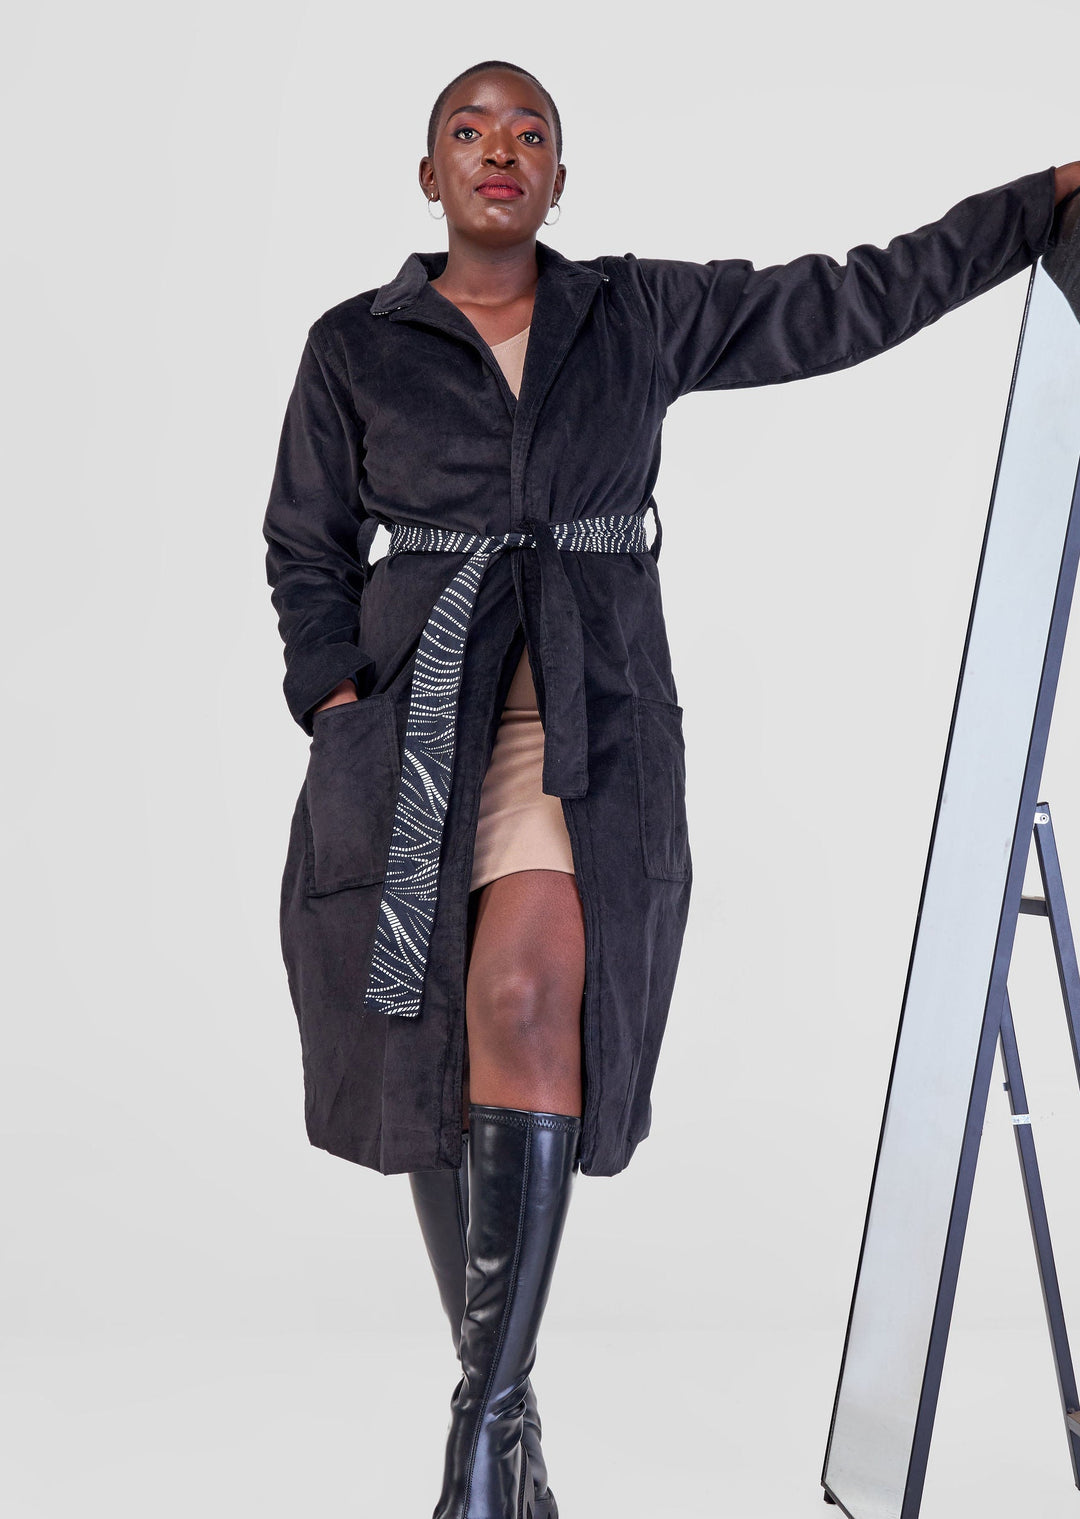 Trenchcoat ‚Giza‘ - mikono.africa Jacken aus Kenia bunte Bomberjacke Partyjacke faire sozial nachhaltig designed in Kenia